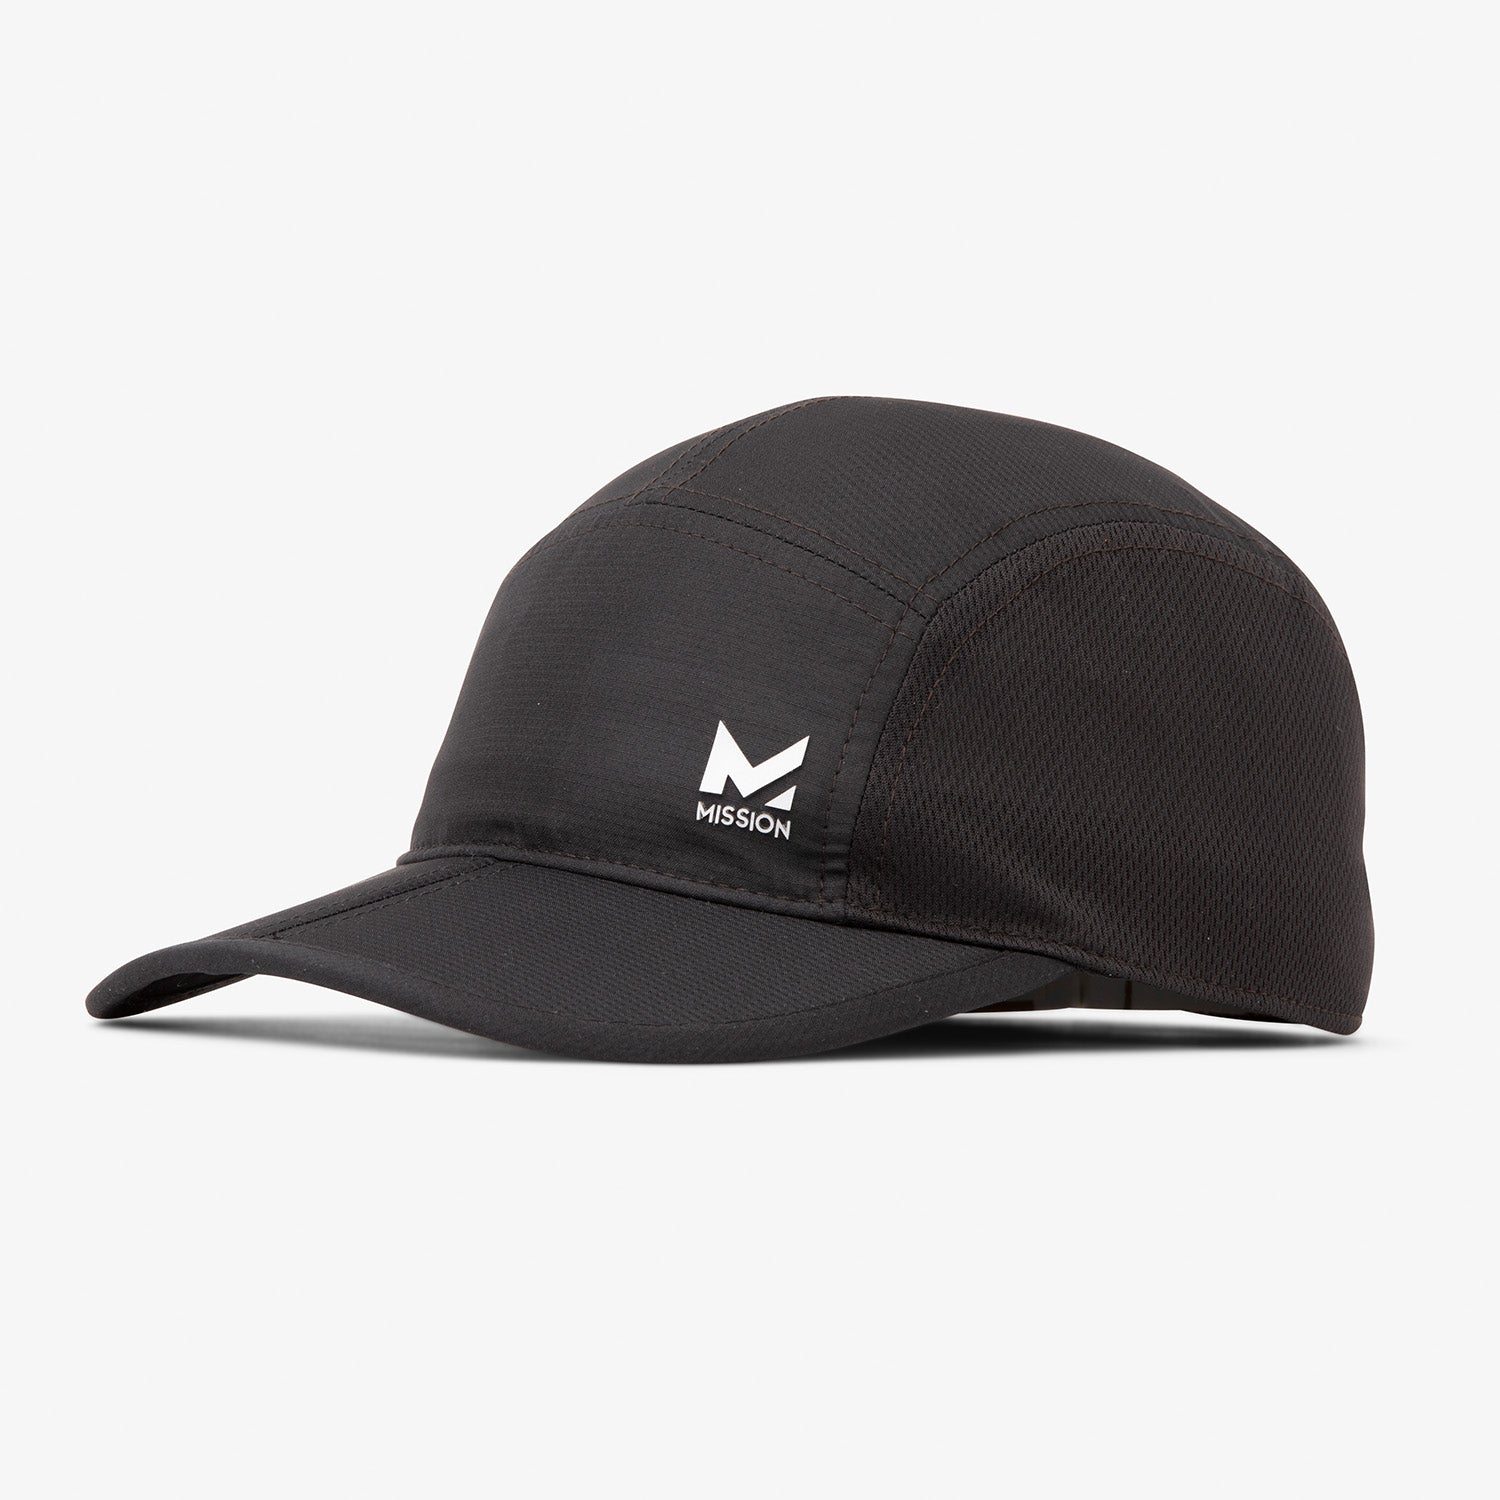 Foldable Performance Hat Caps MISSION Black  